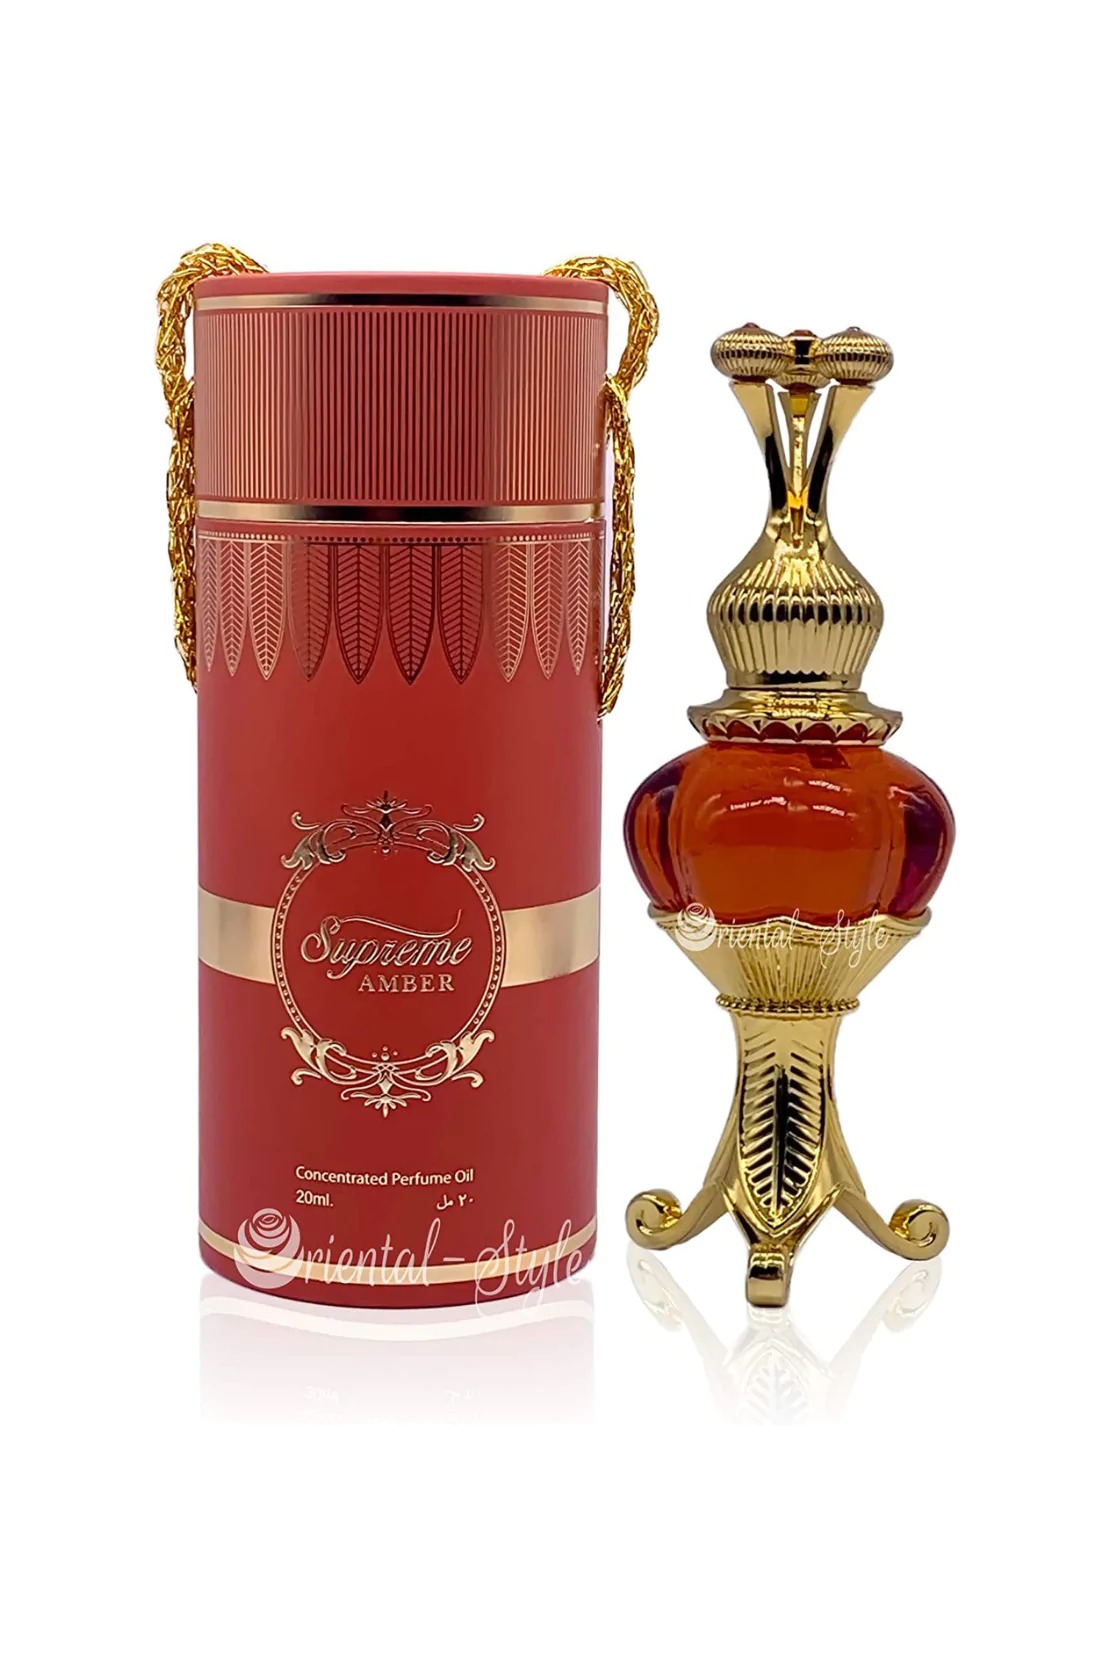 Supreme Amber Oil Perfume 20ml
